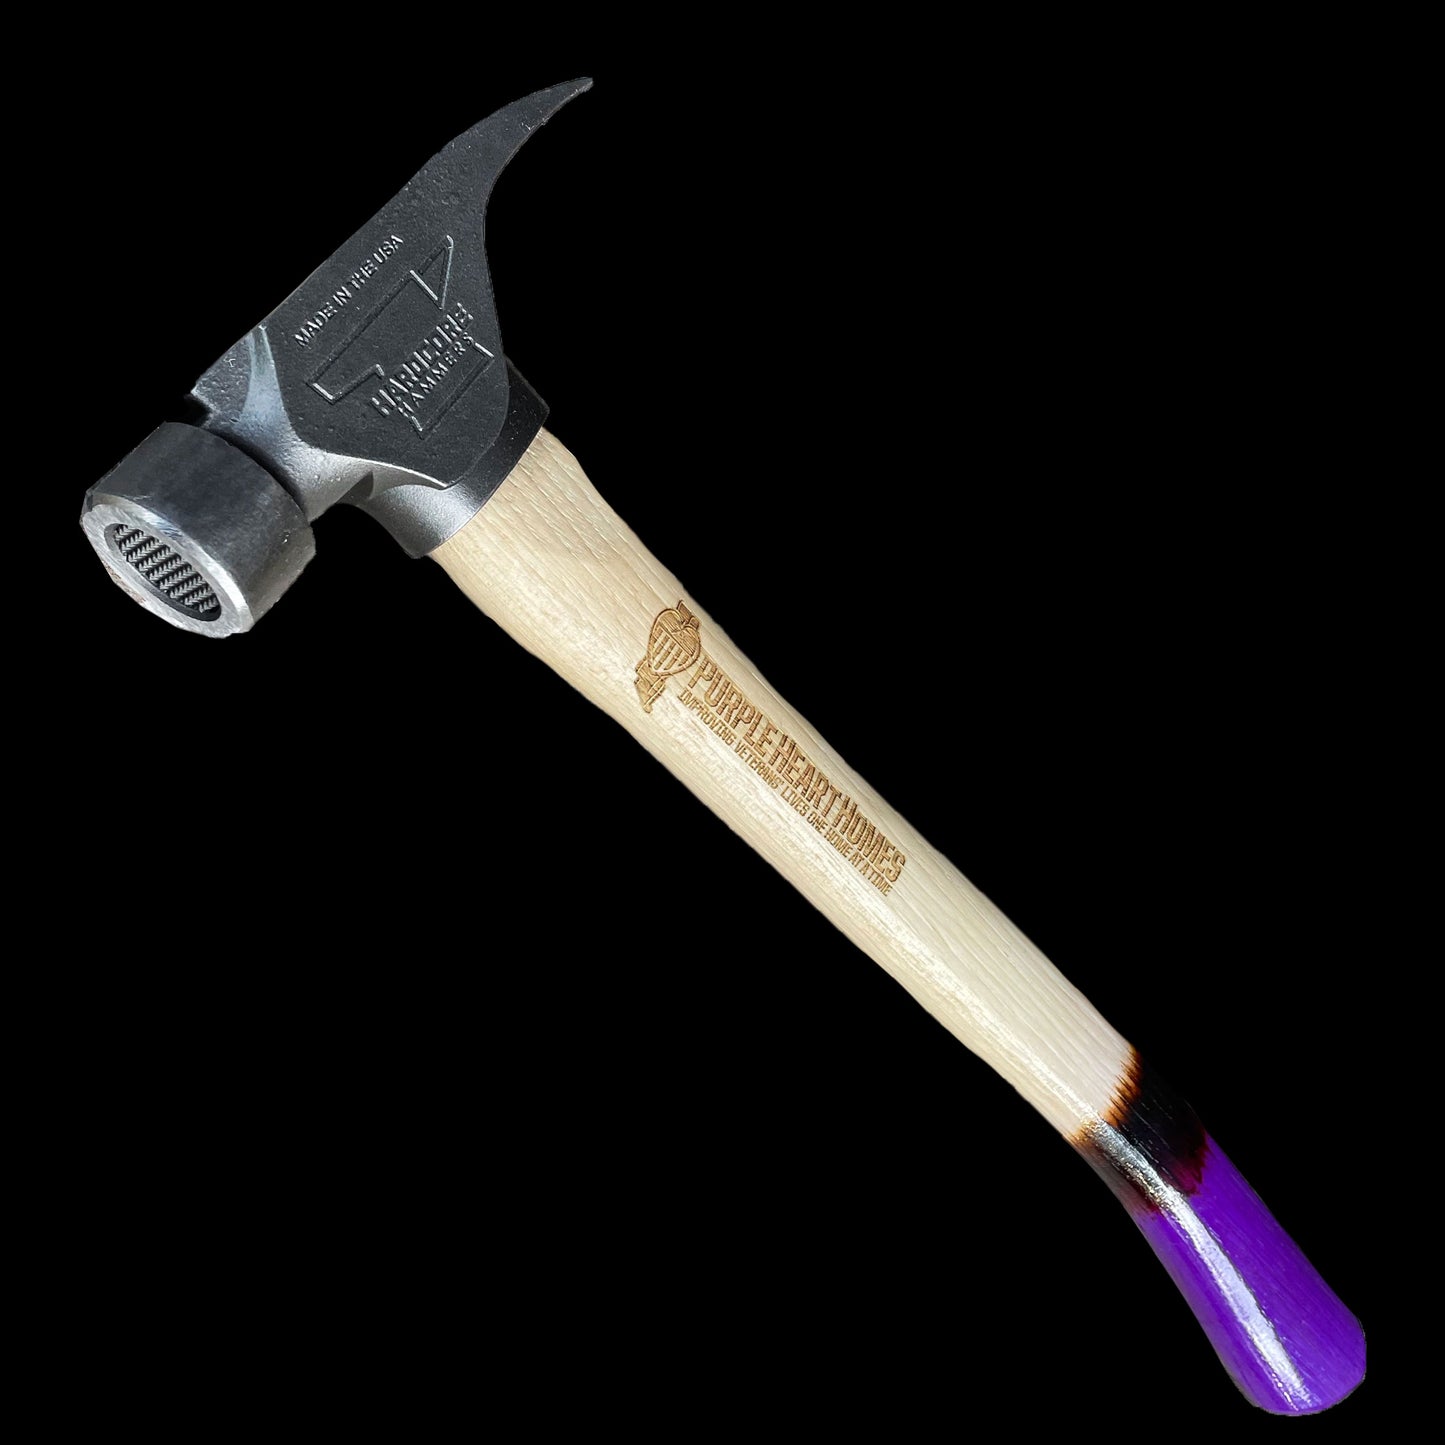 Purple Heart Homes Hammer